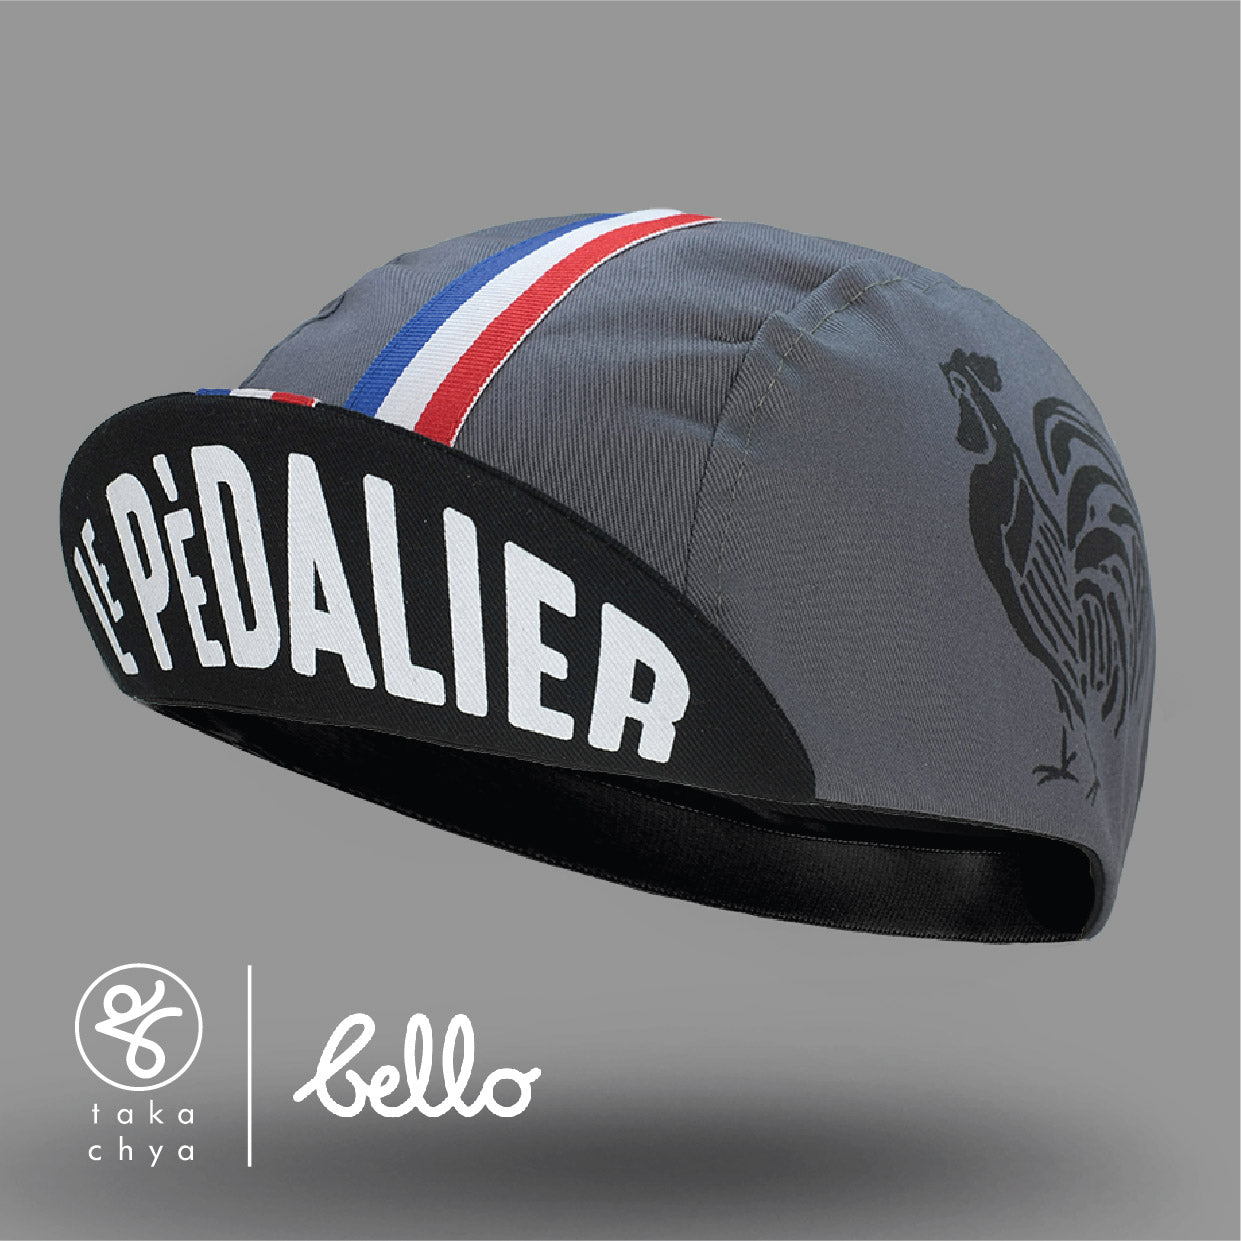 Le Pédalier - Bello Cyclist Designer Collaboration Cycling Cap